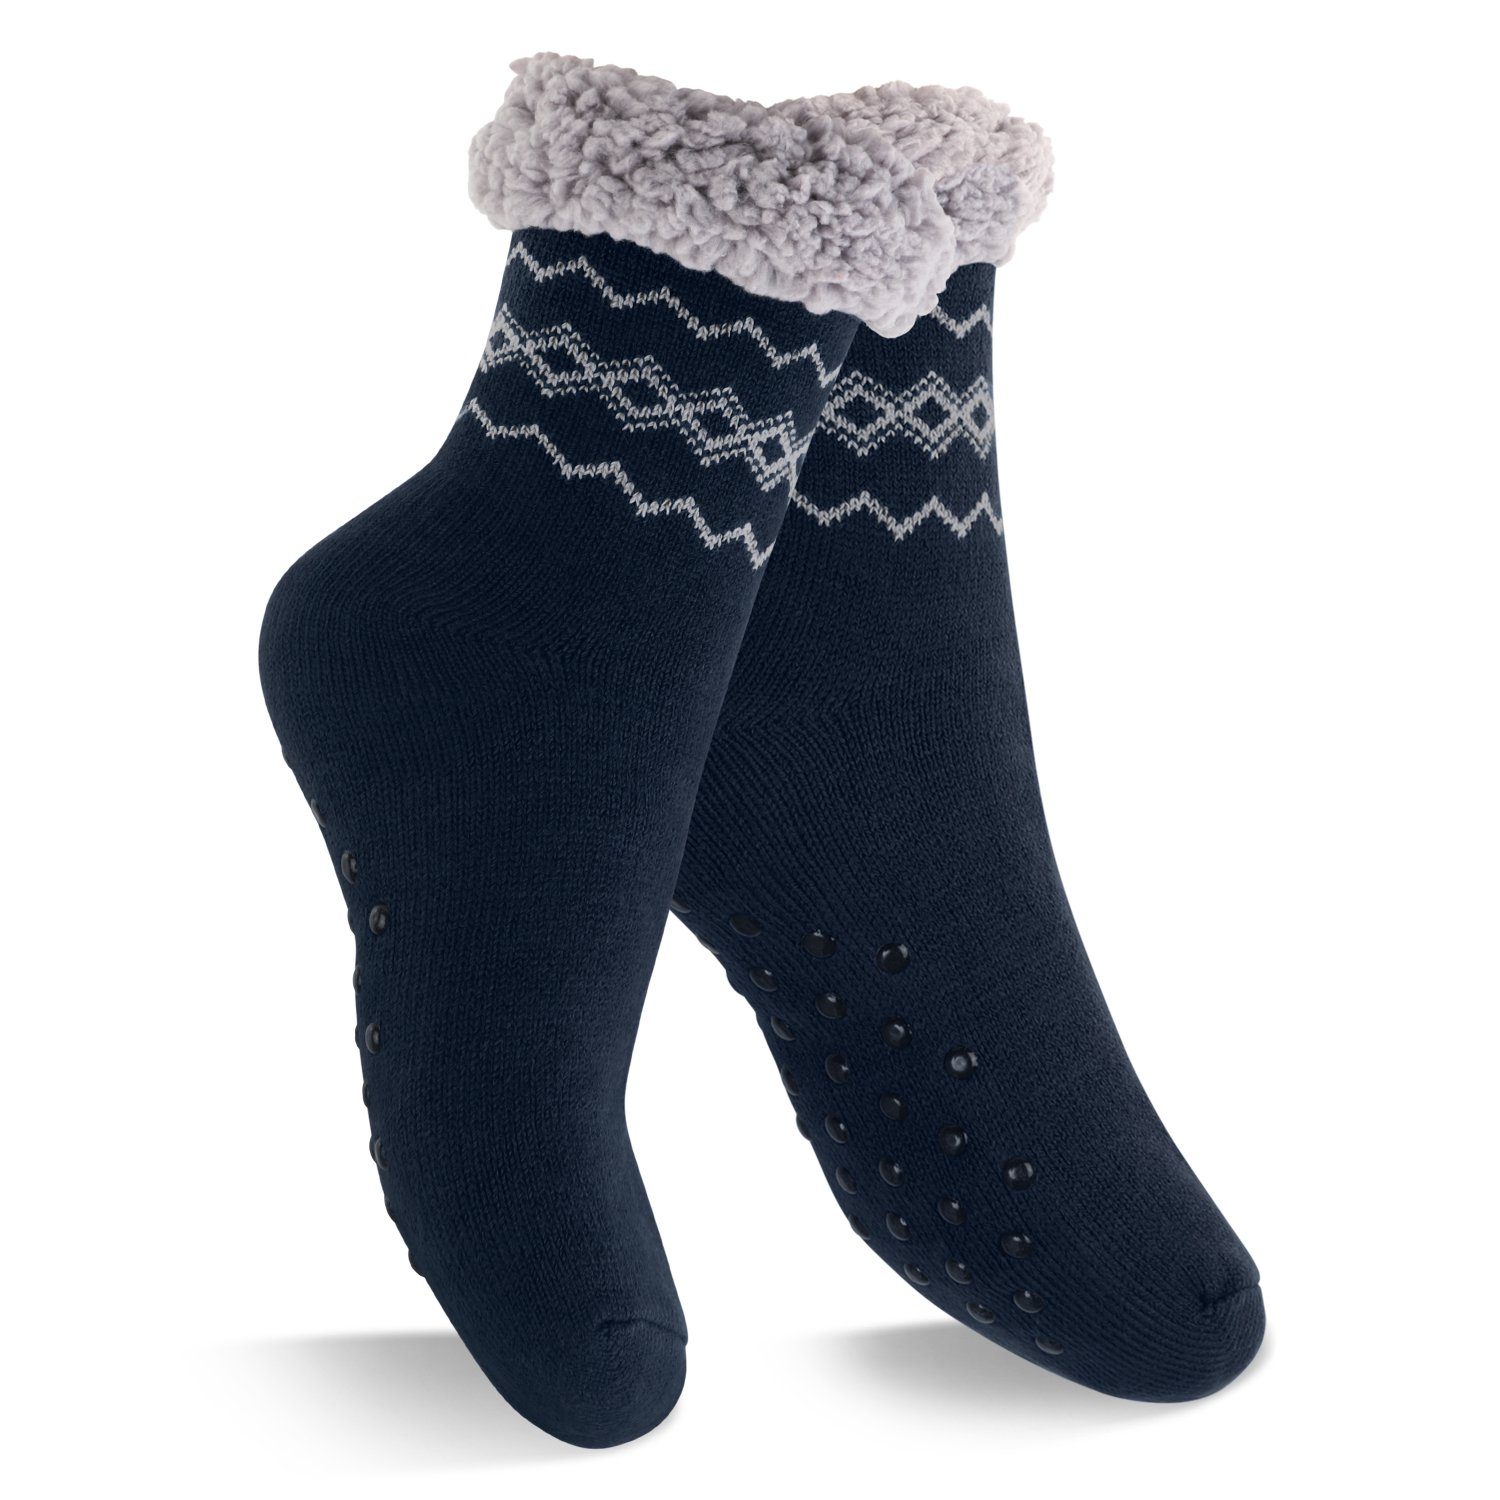 Footstar ABS-Socken Winter Haussocken für Damen & Herren (1/2 Paar) Kuschelsocken Navy